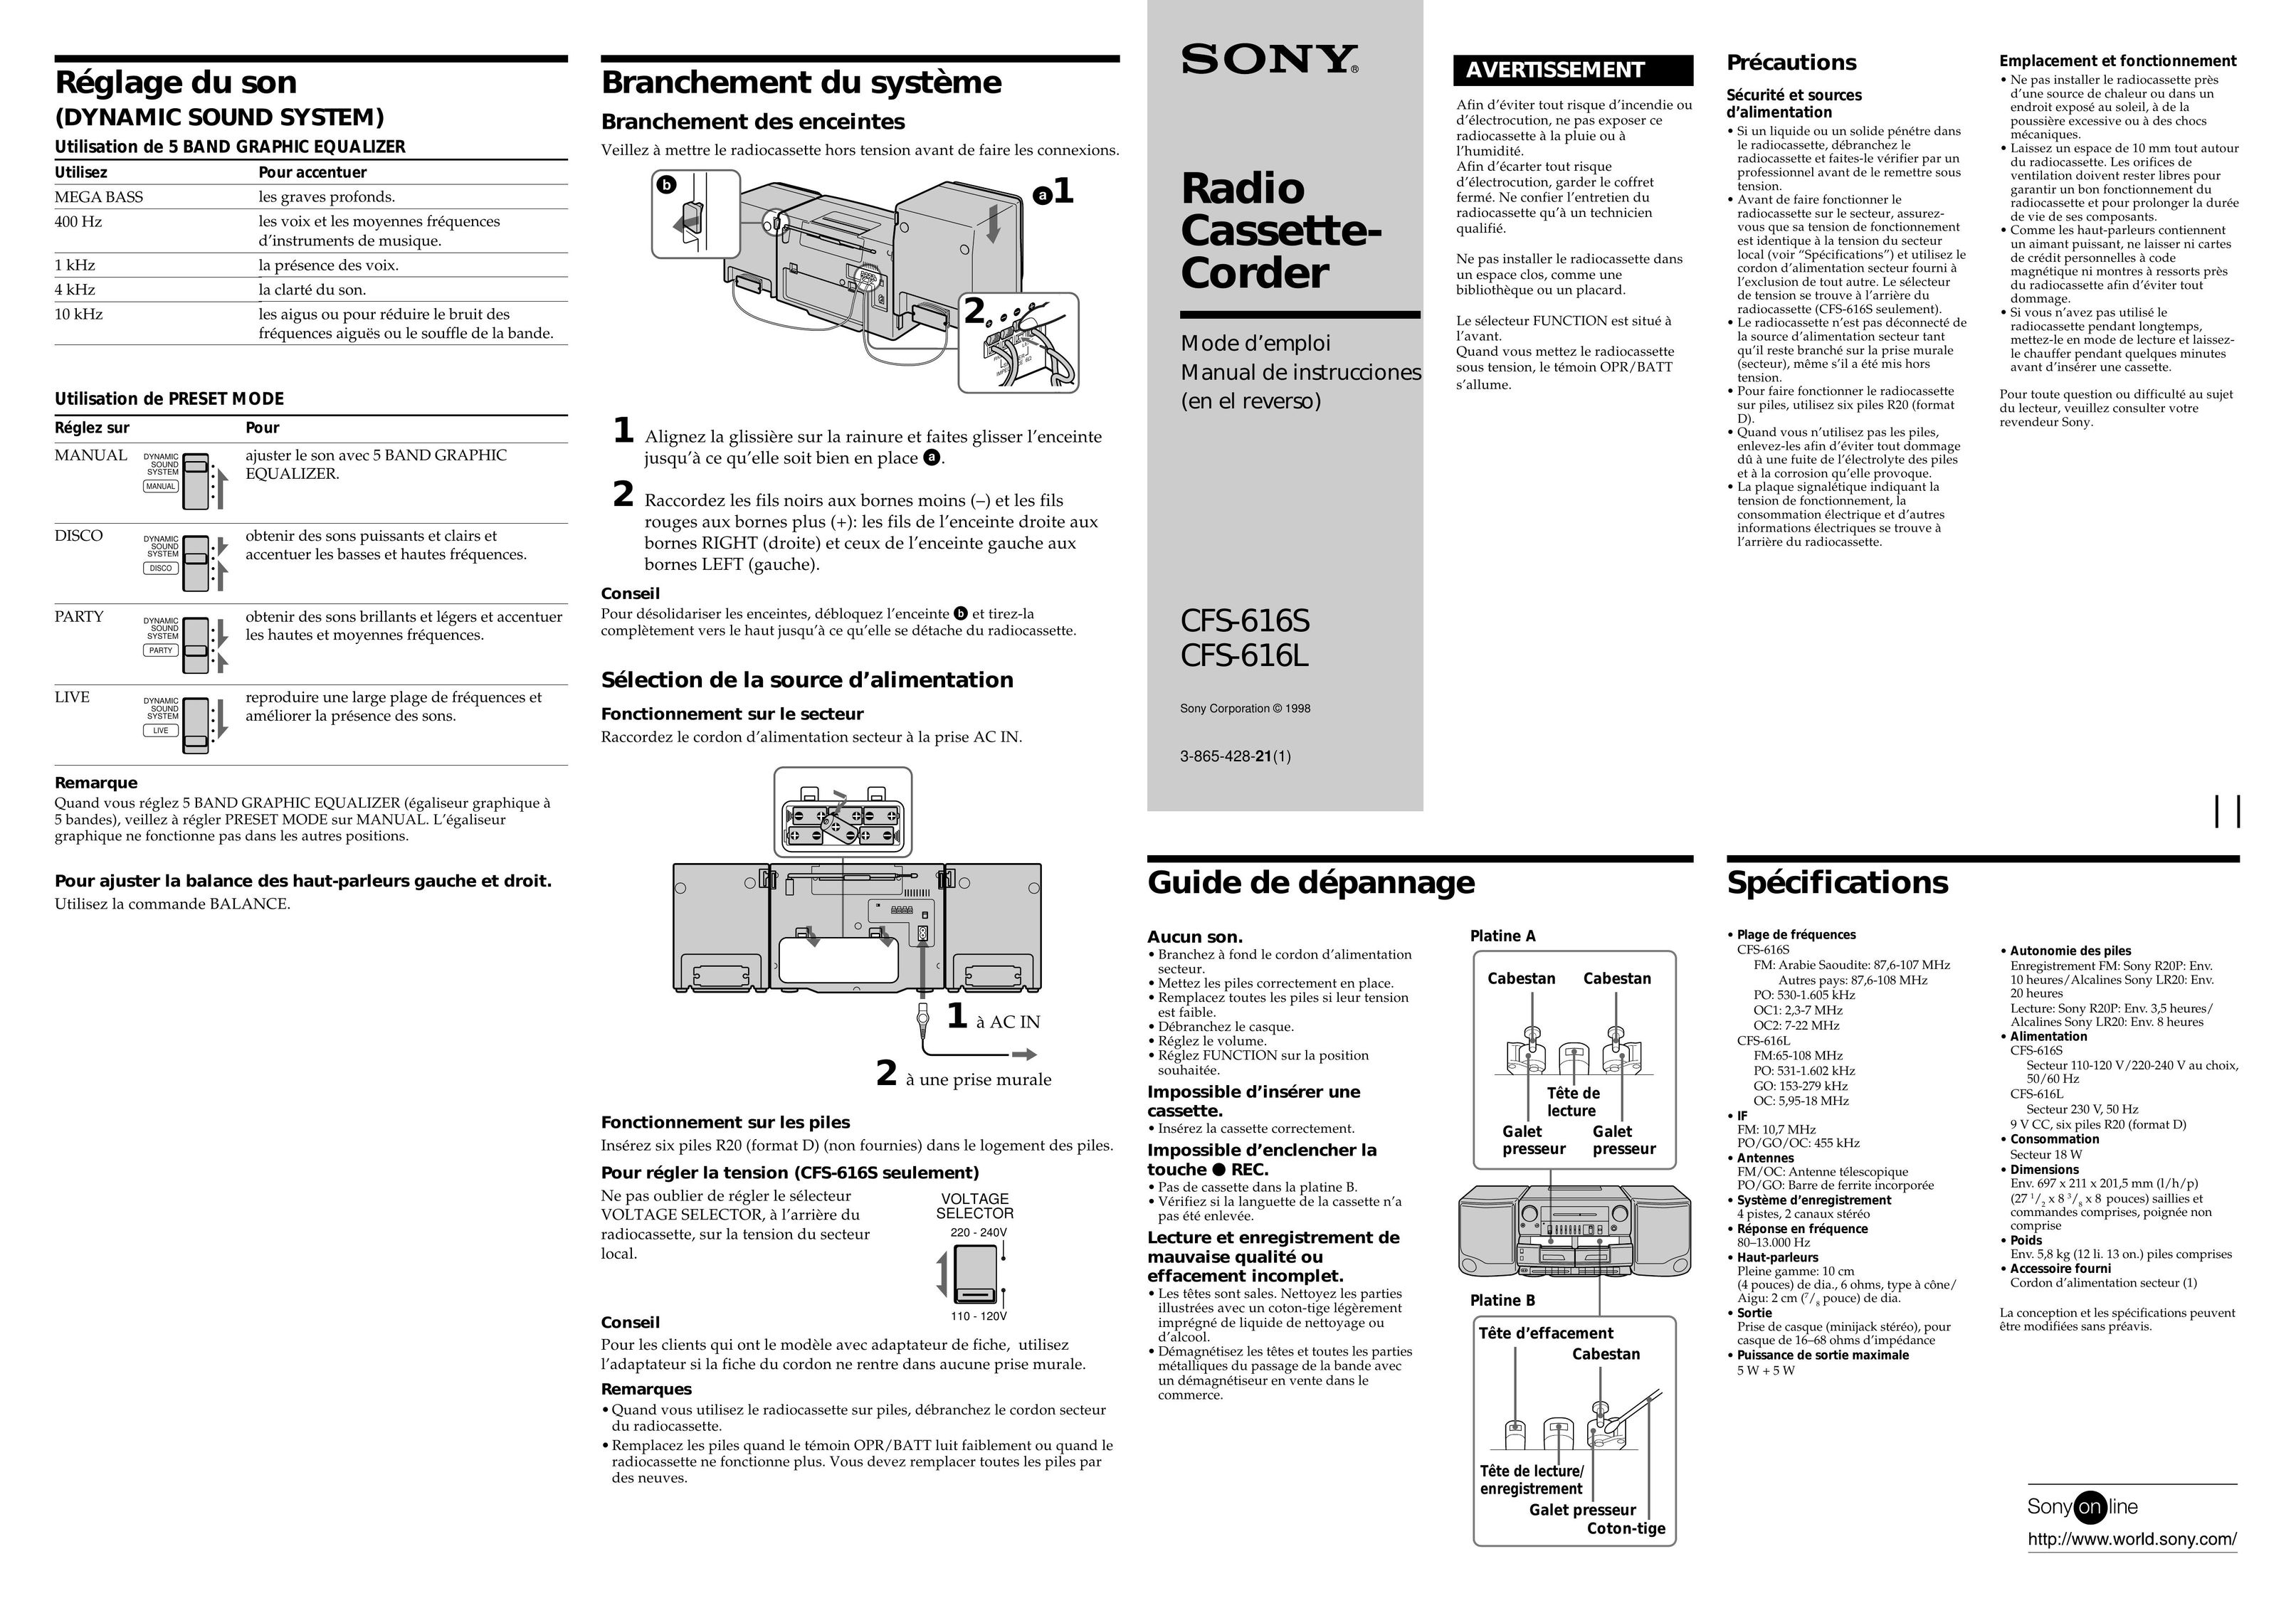 Sony CFS-616L Cassette Player User Manual